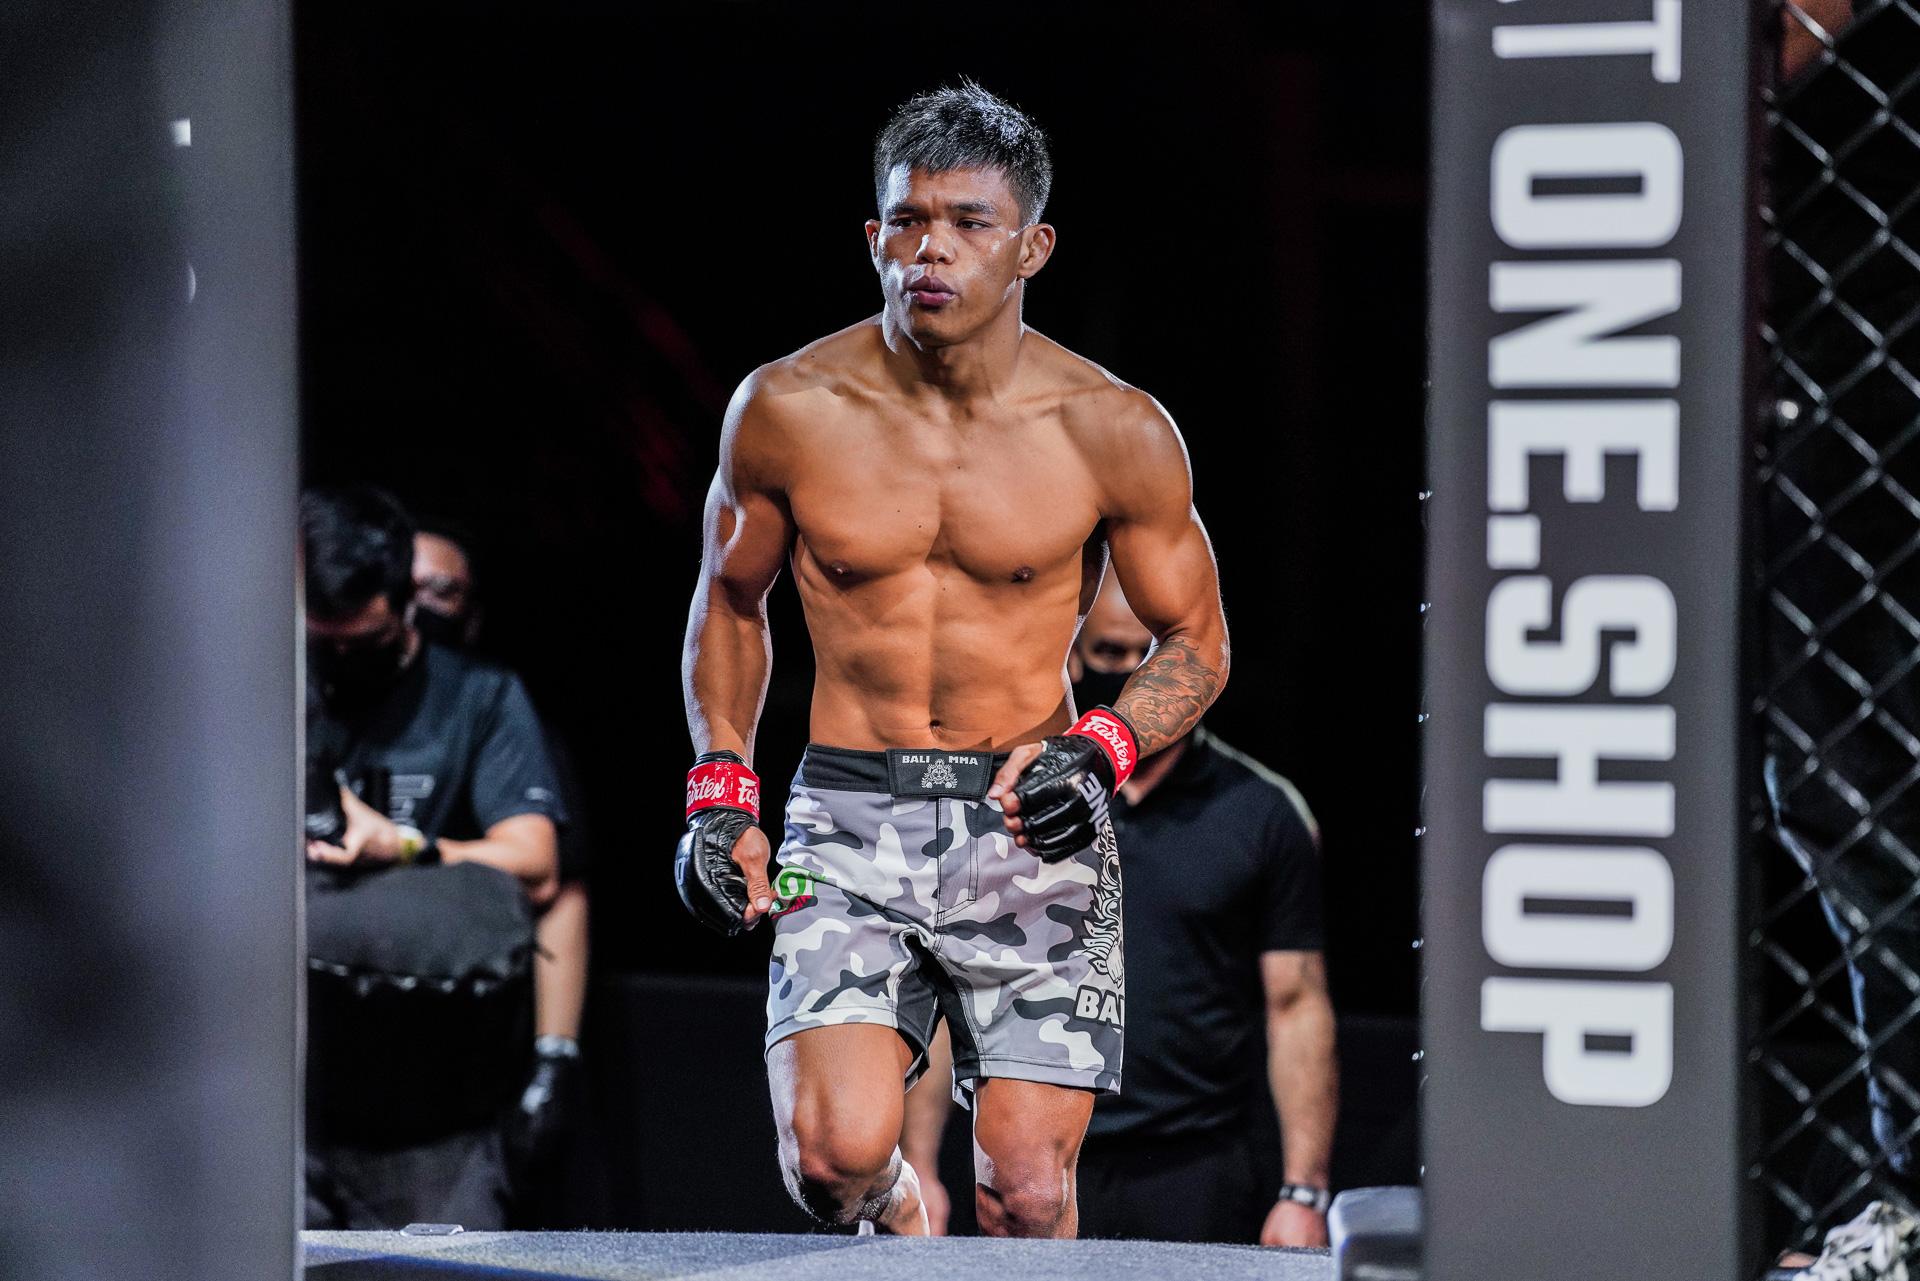 Petarung MMA Indonesia, Elipitua Siregar siap comeback di ONE Championship usai belum lama ini menumbangkan lawannya dengan kuncian anaconda. - INDOSPORT